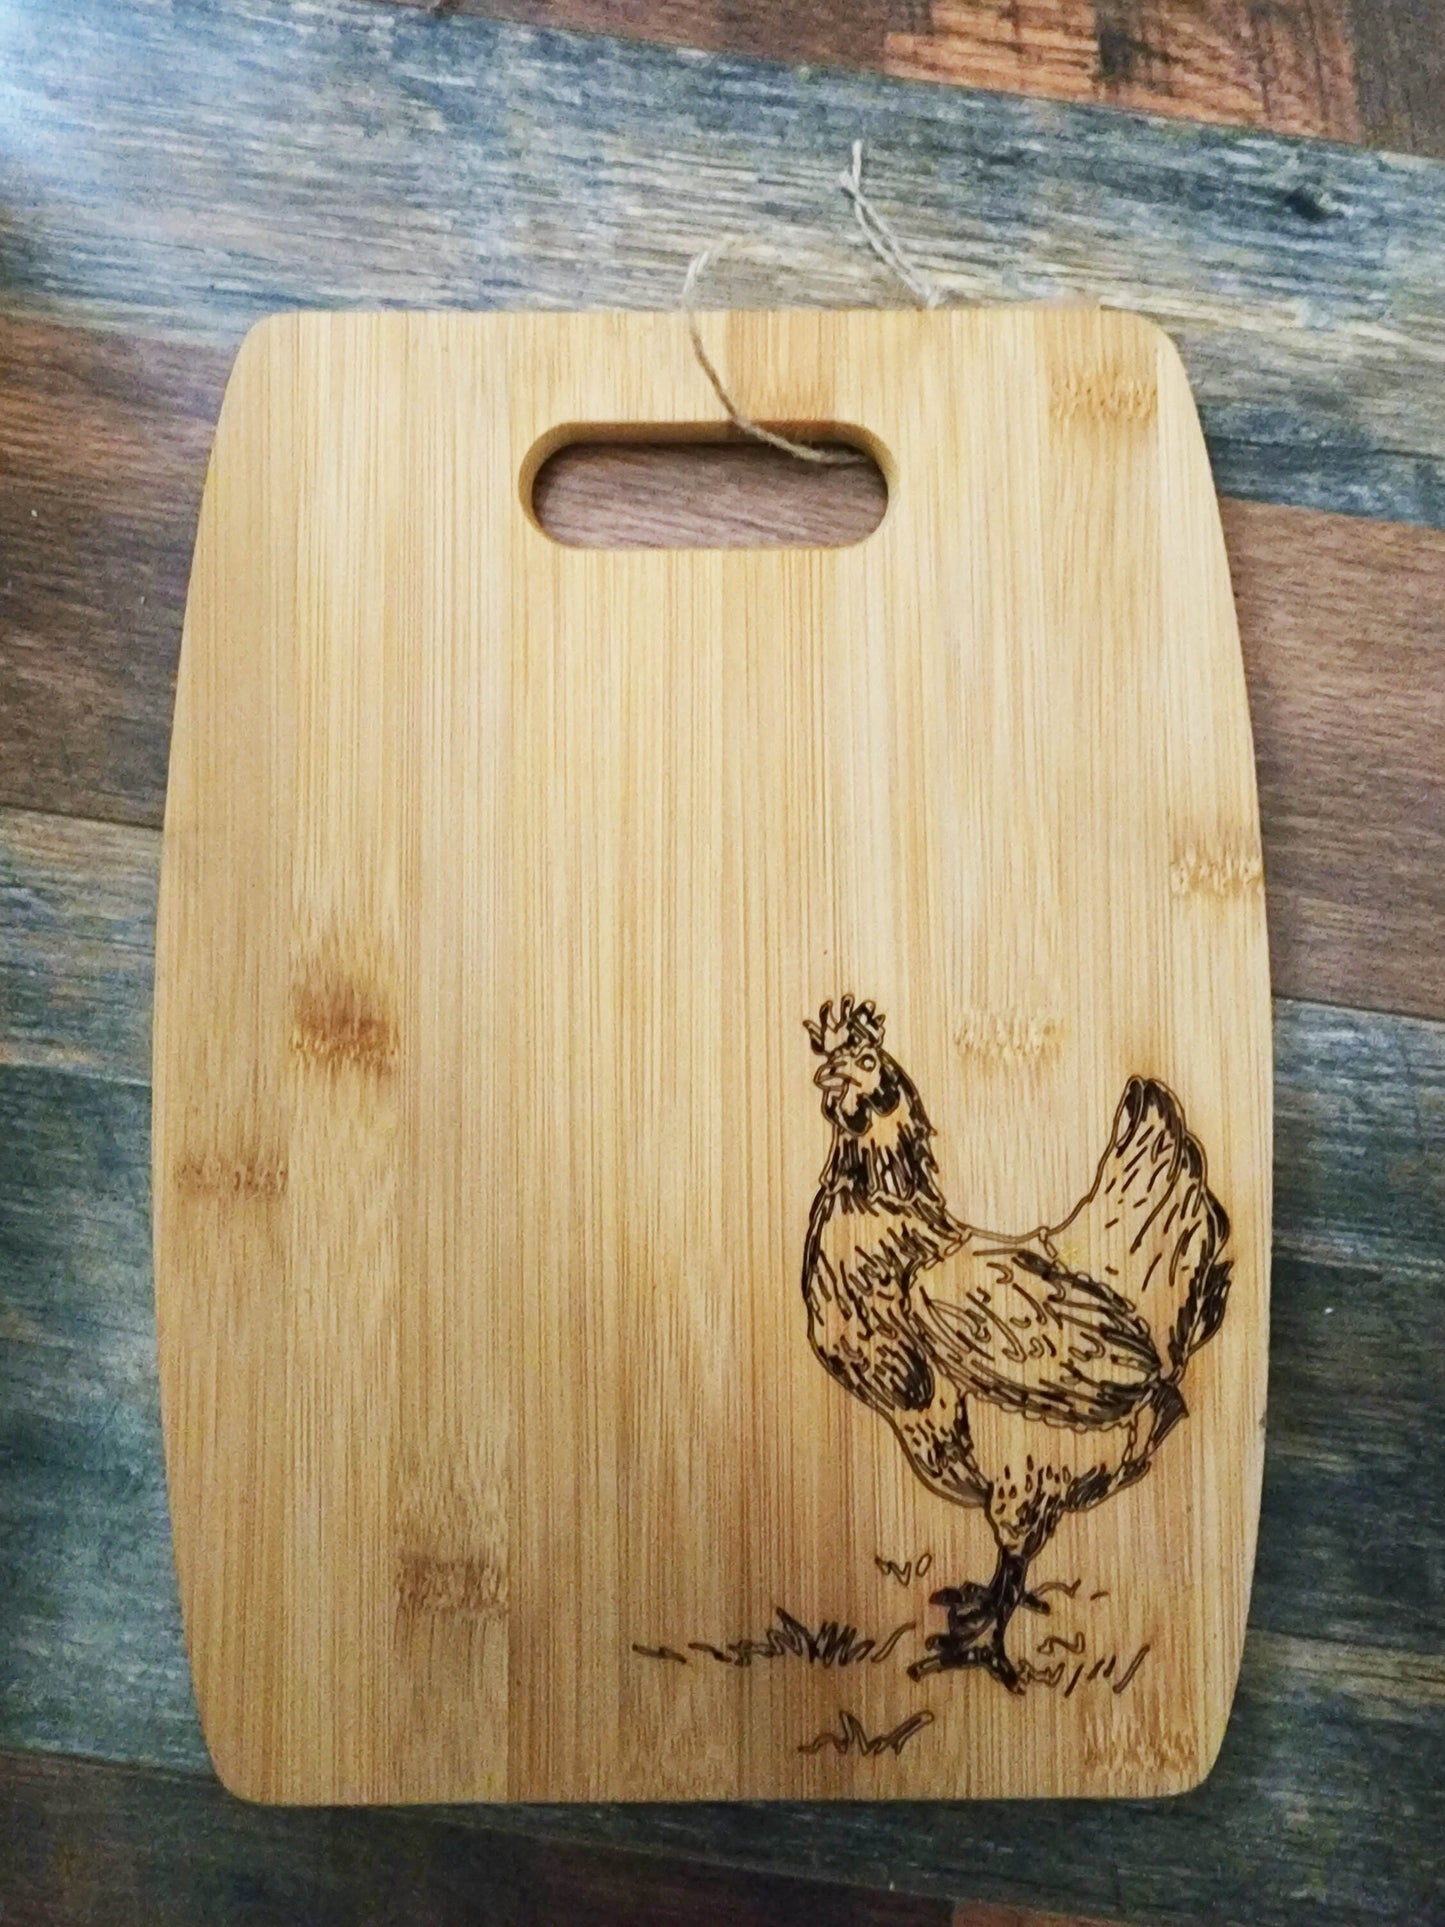 Chicken sketch bamboo cutting board